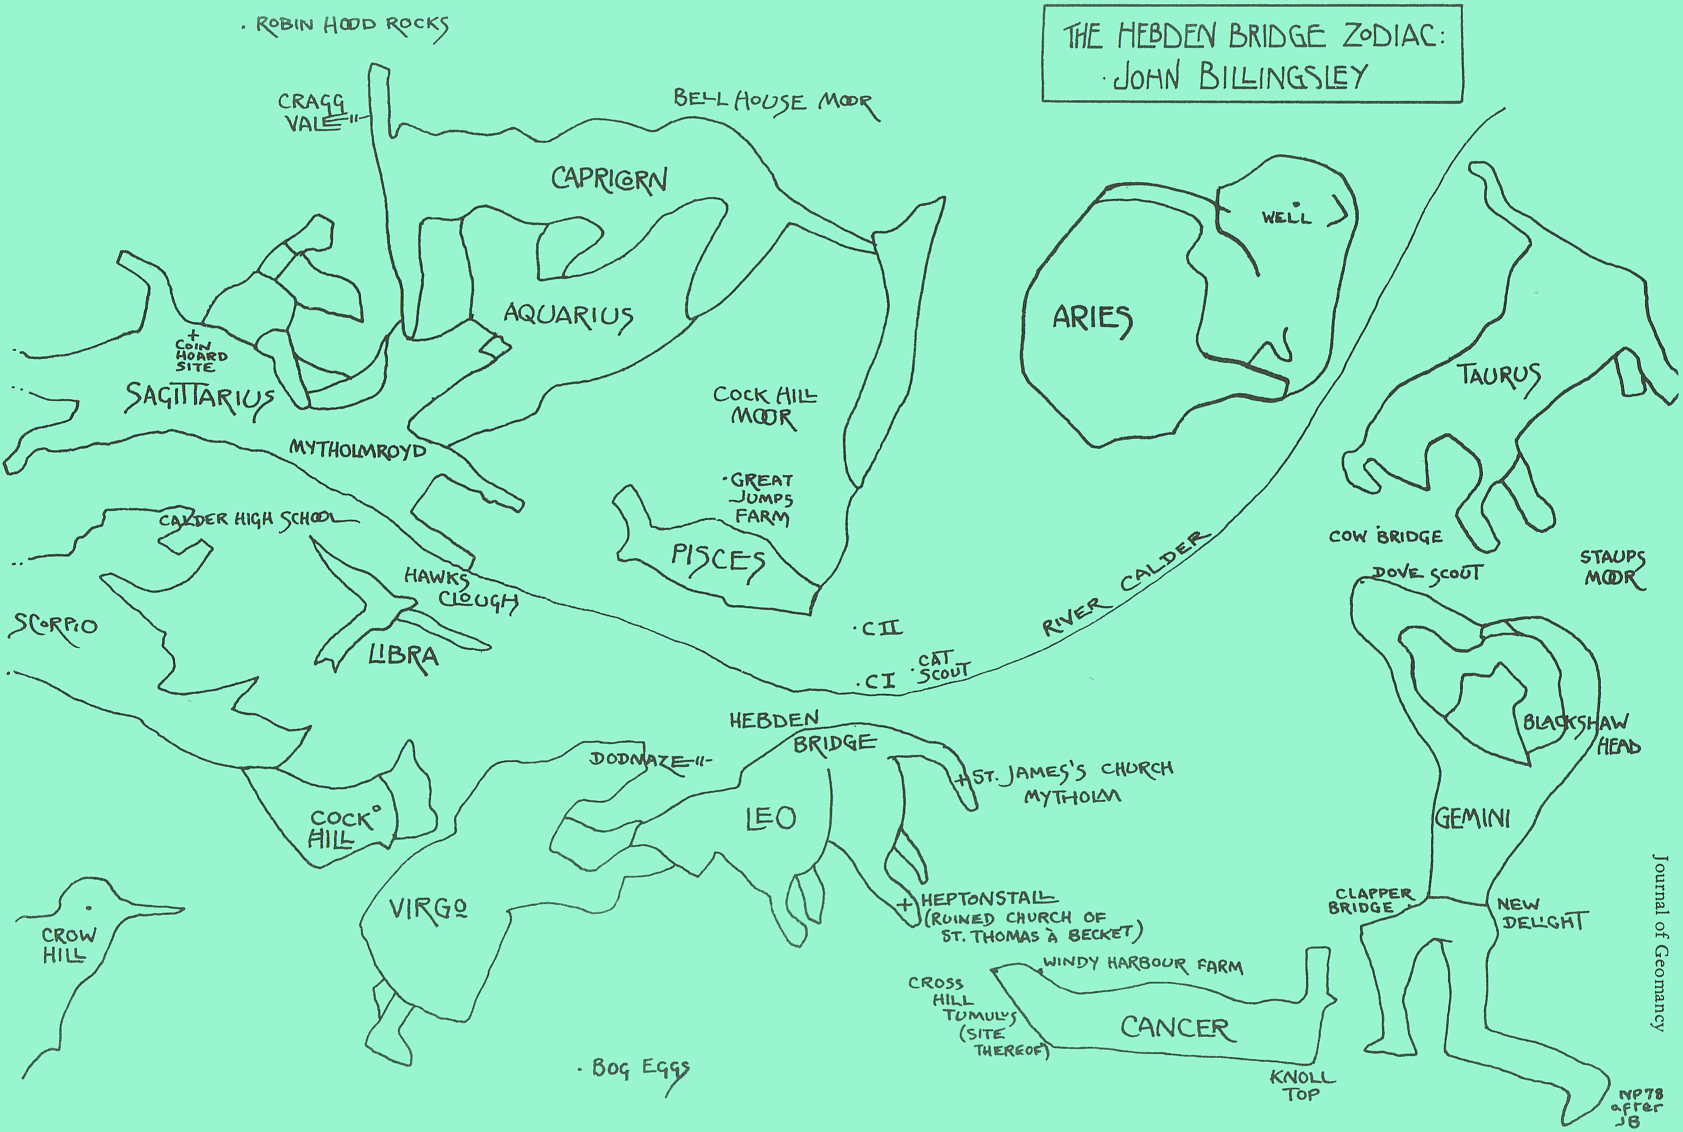 Map of the Hebden Bridge zodiac